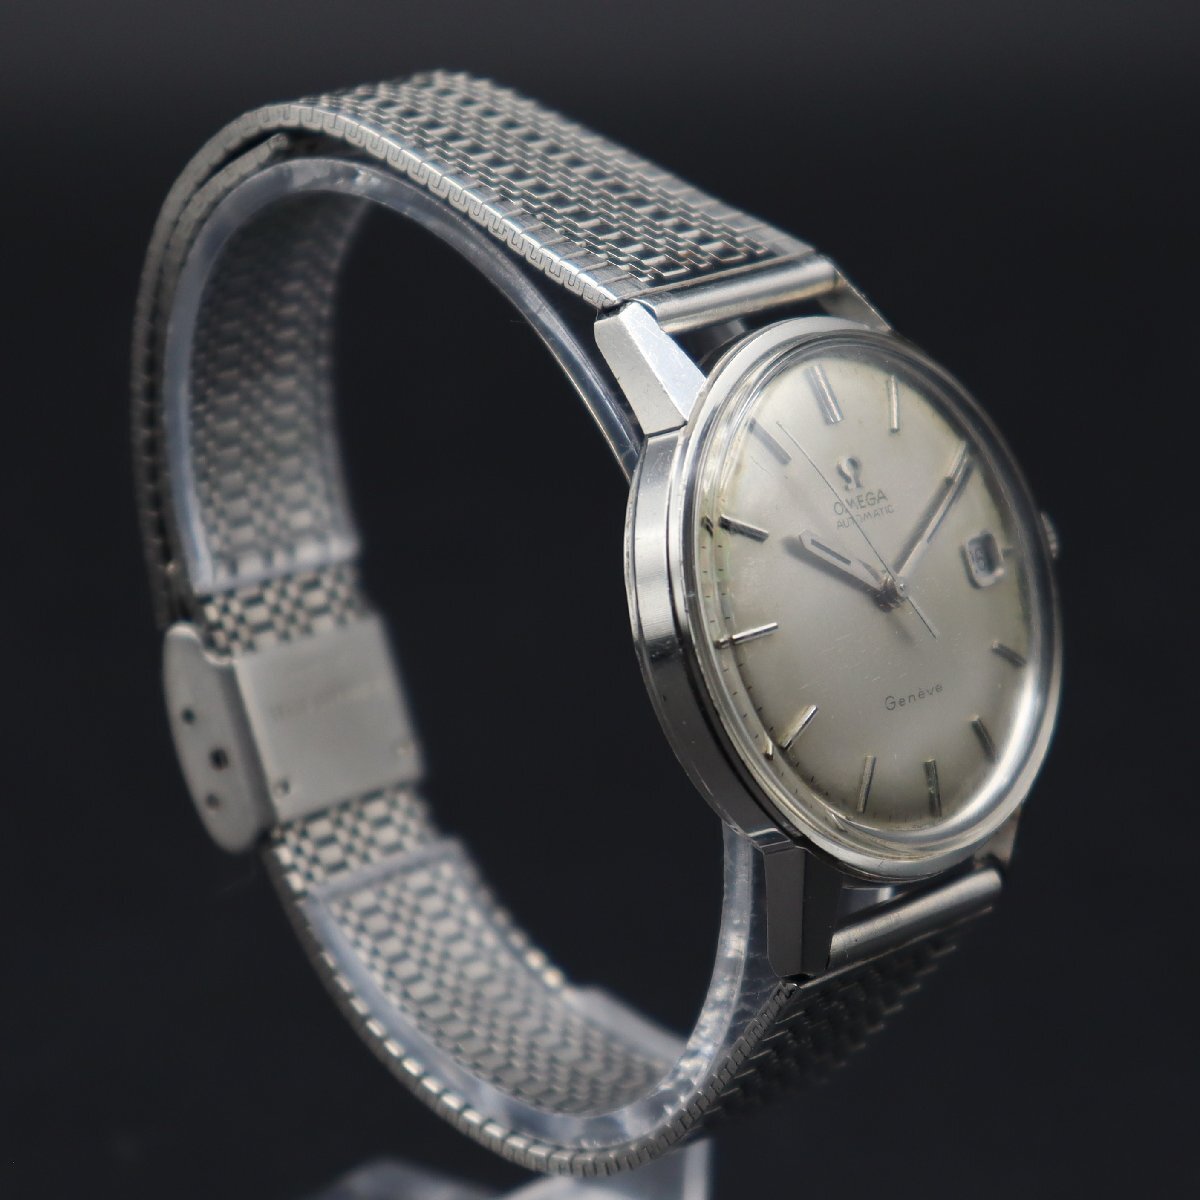 OMEGA GENEVE オメガ ジュネーブ Ref.166.037 Cal.565 自動巻き 1970年頃製造 デイト スイス製 アンティーク メンズ腕時計_画像4